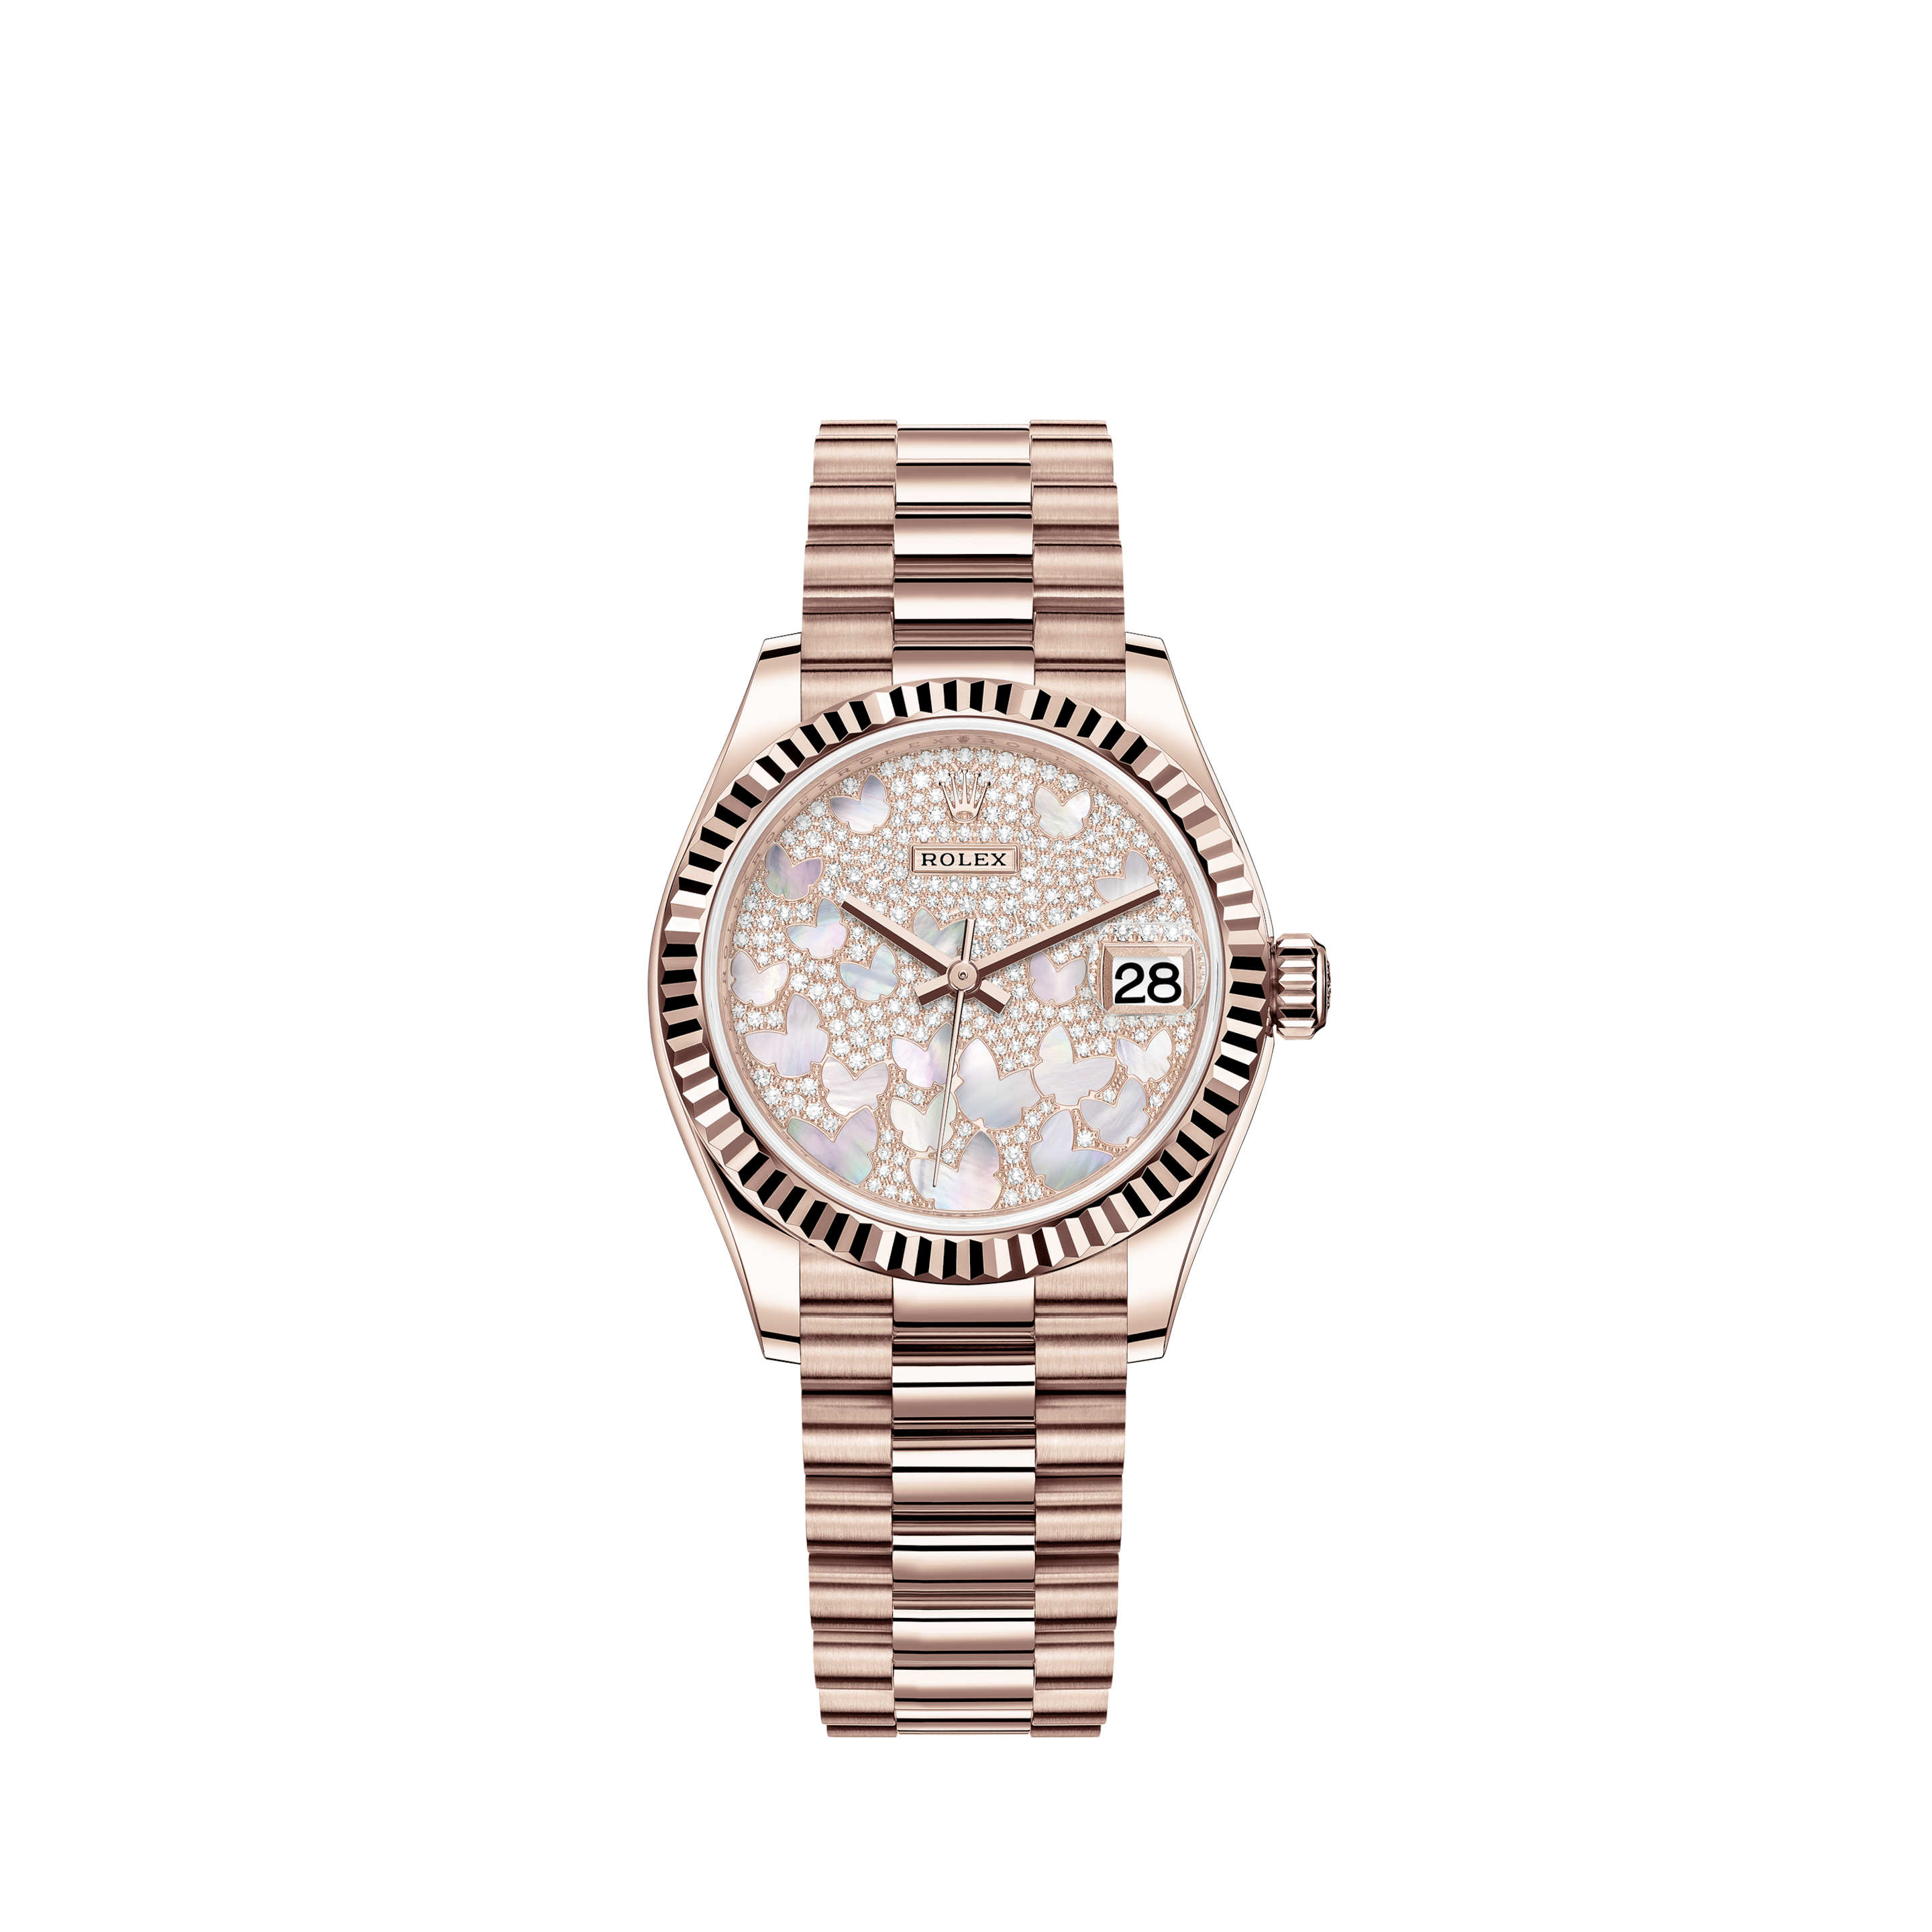 Rolex Lady Datejust 26 Steel / White Gold Automatic Women's Watch Ref. 179174 B&P